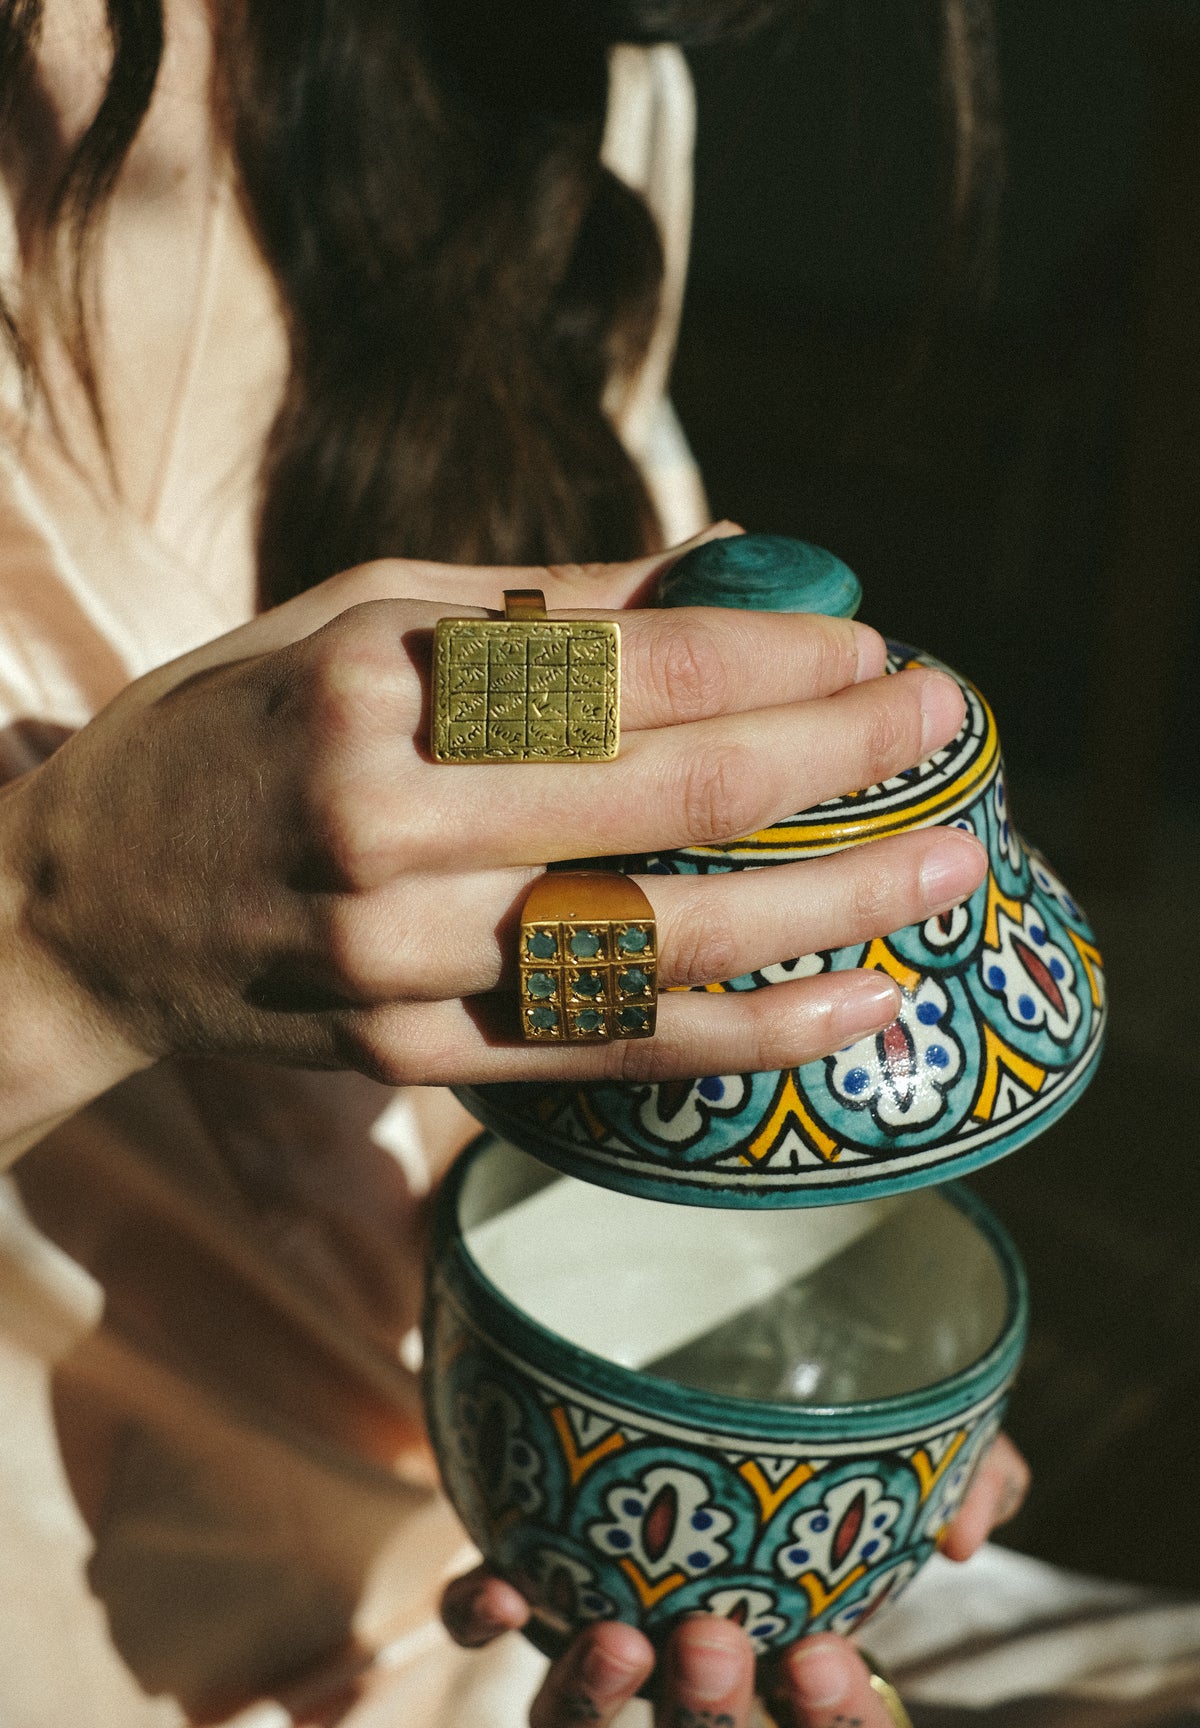 Ring with magic symbols